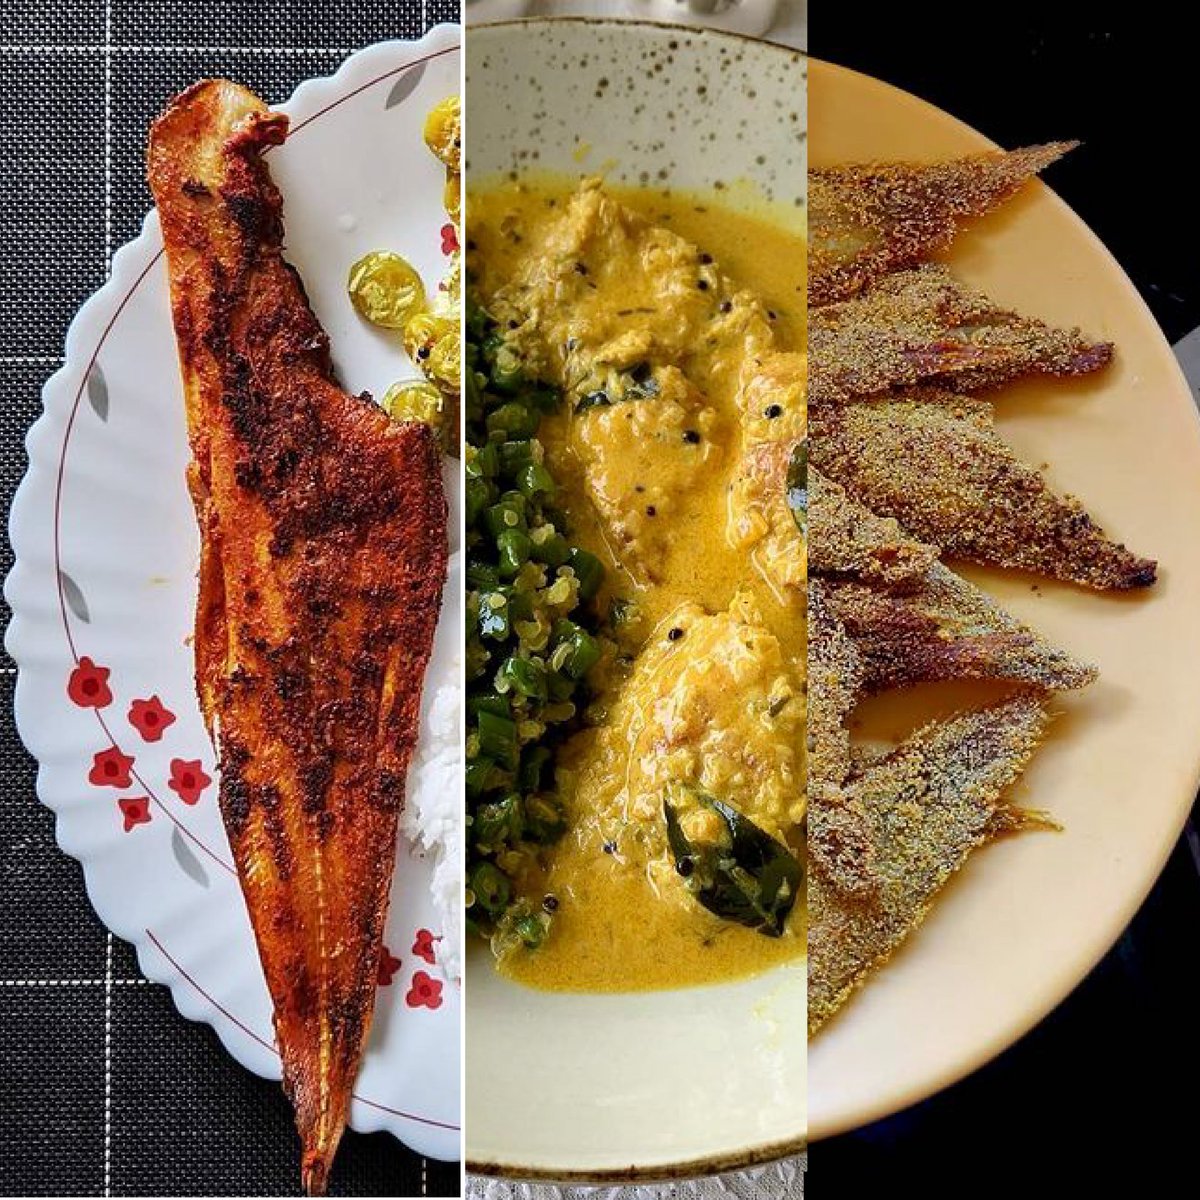 Largescale Tonguesole, a k.a മാന്തള്(manthal) ळेप(lepo) ನಂಗು(nangu) & நாக்கு மீன்(naakumeen) is #InSeason this month on both coasts. Check our calendar on inseasonfish.com for more sustainable seafood options
#AskForInSeasonFish
🍽️: @theknotstory @shagunkhanna @foodonrun__